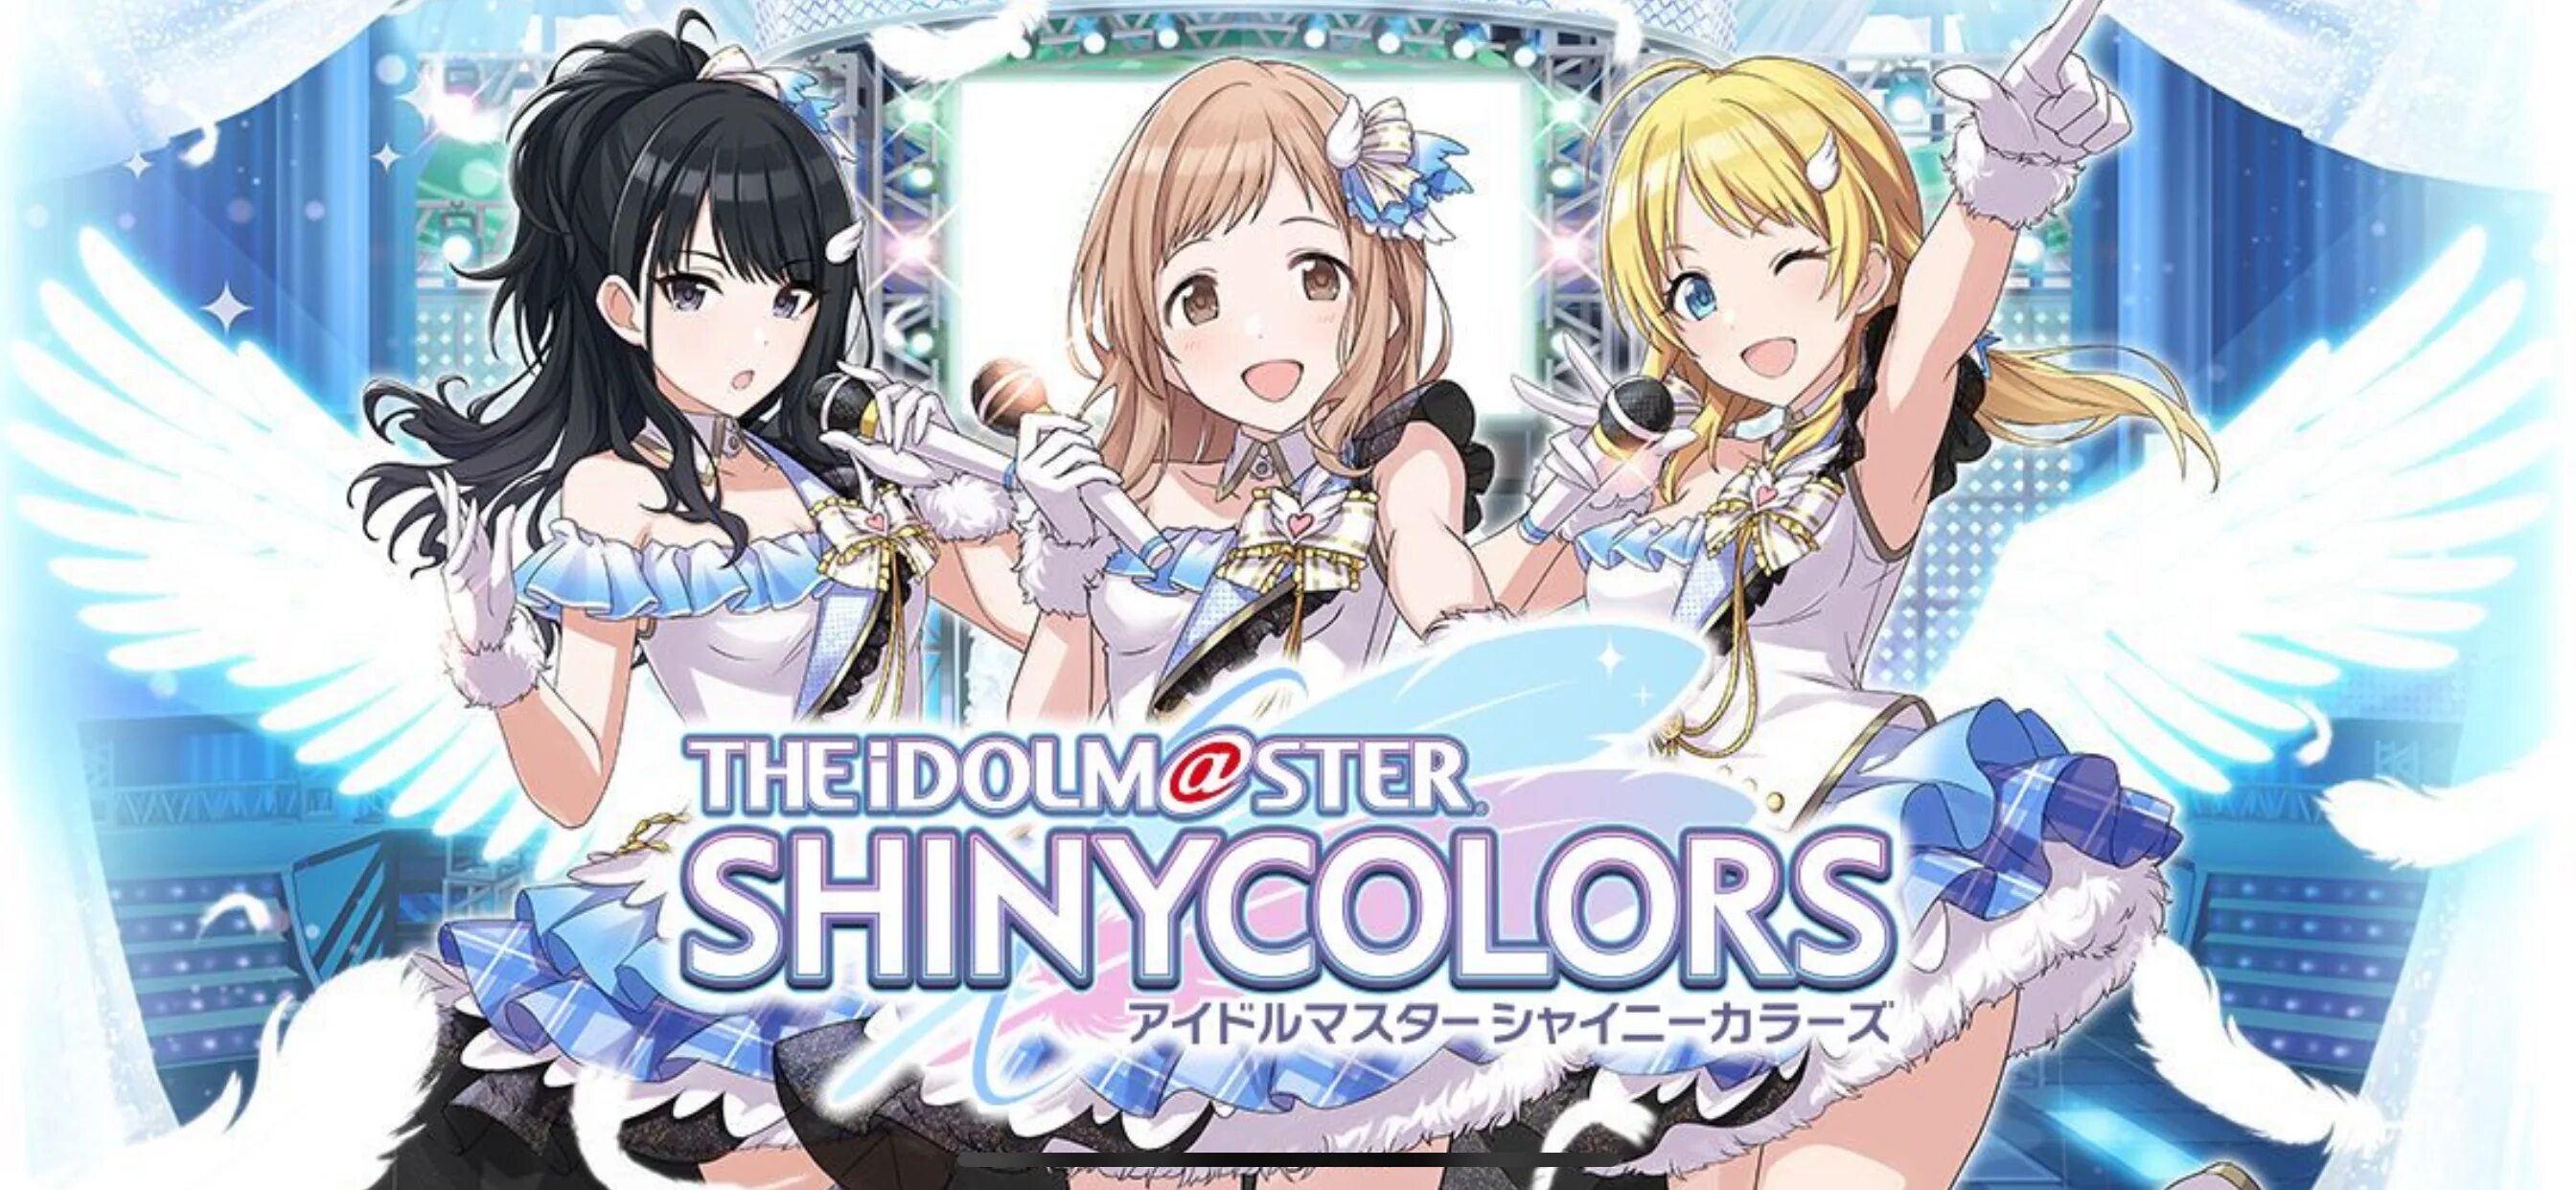 Idolmaster shiny Colors игра. Идол@STER блестящие цвета. The idolmaster: Shining Colors.